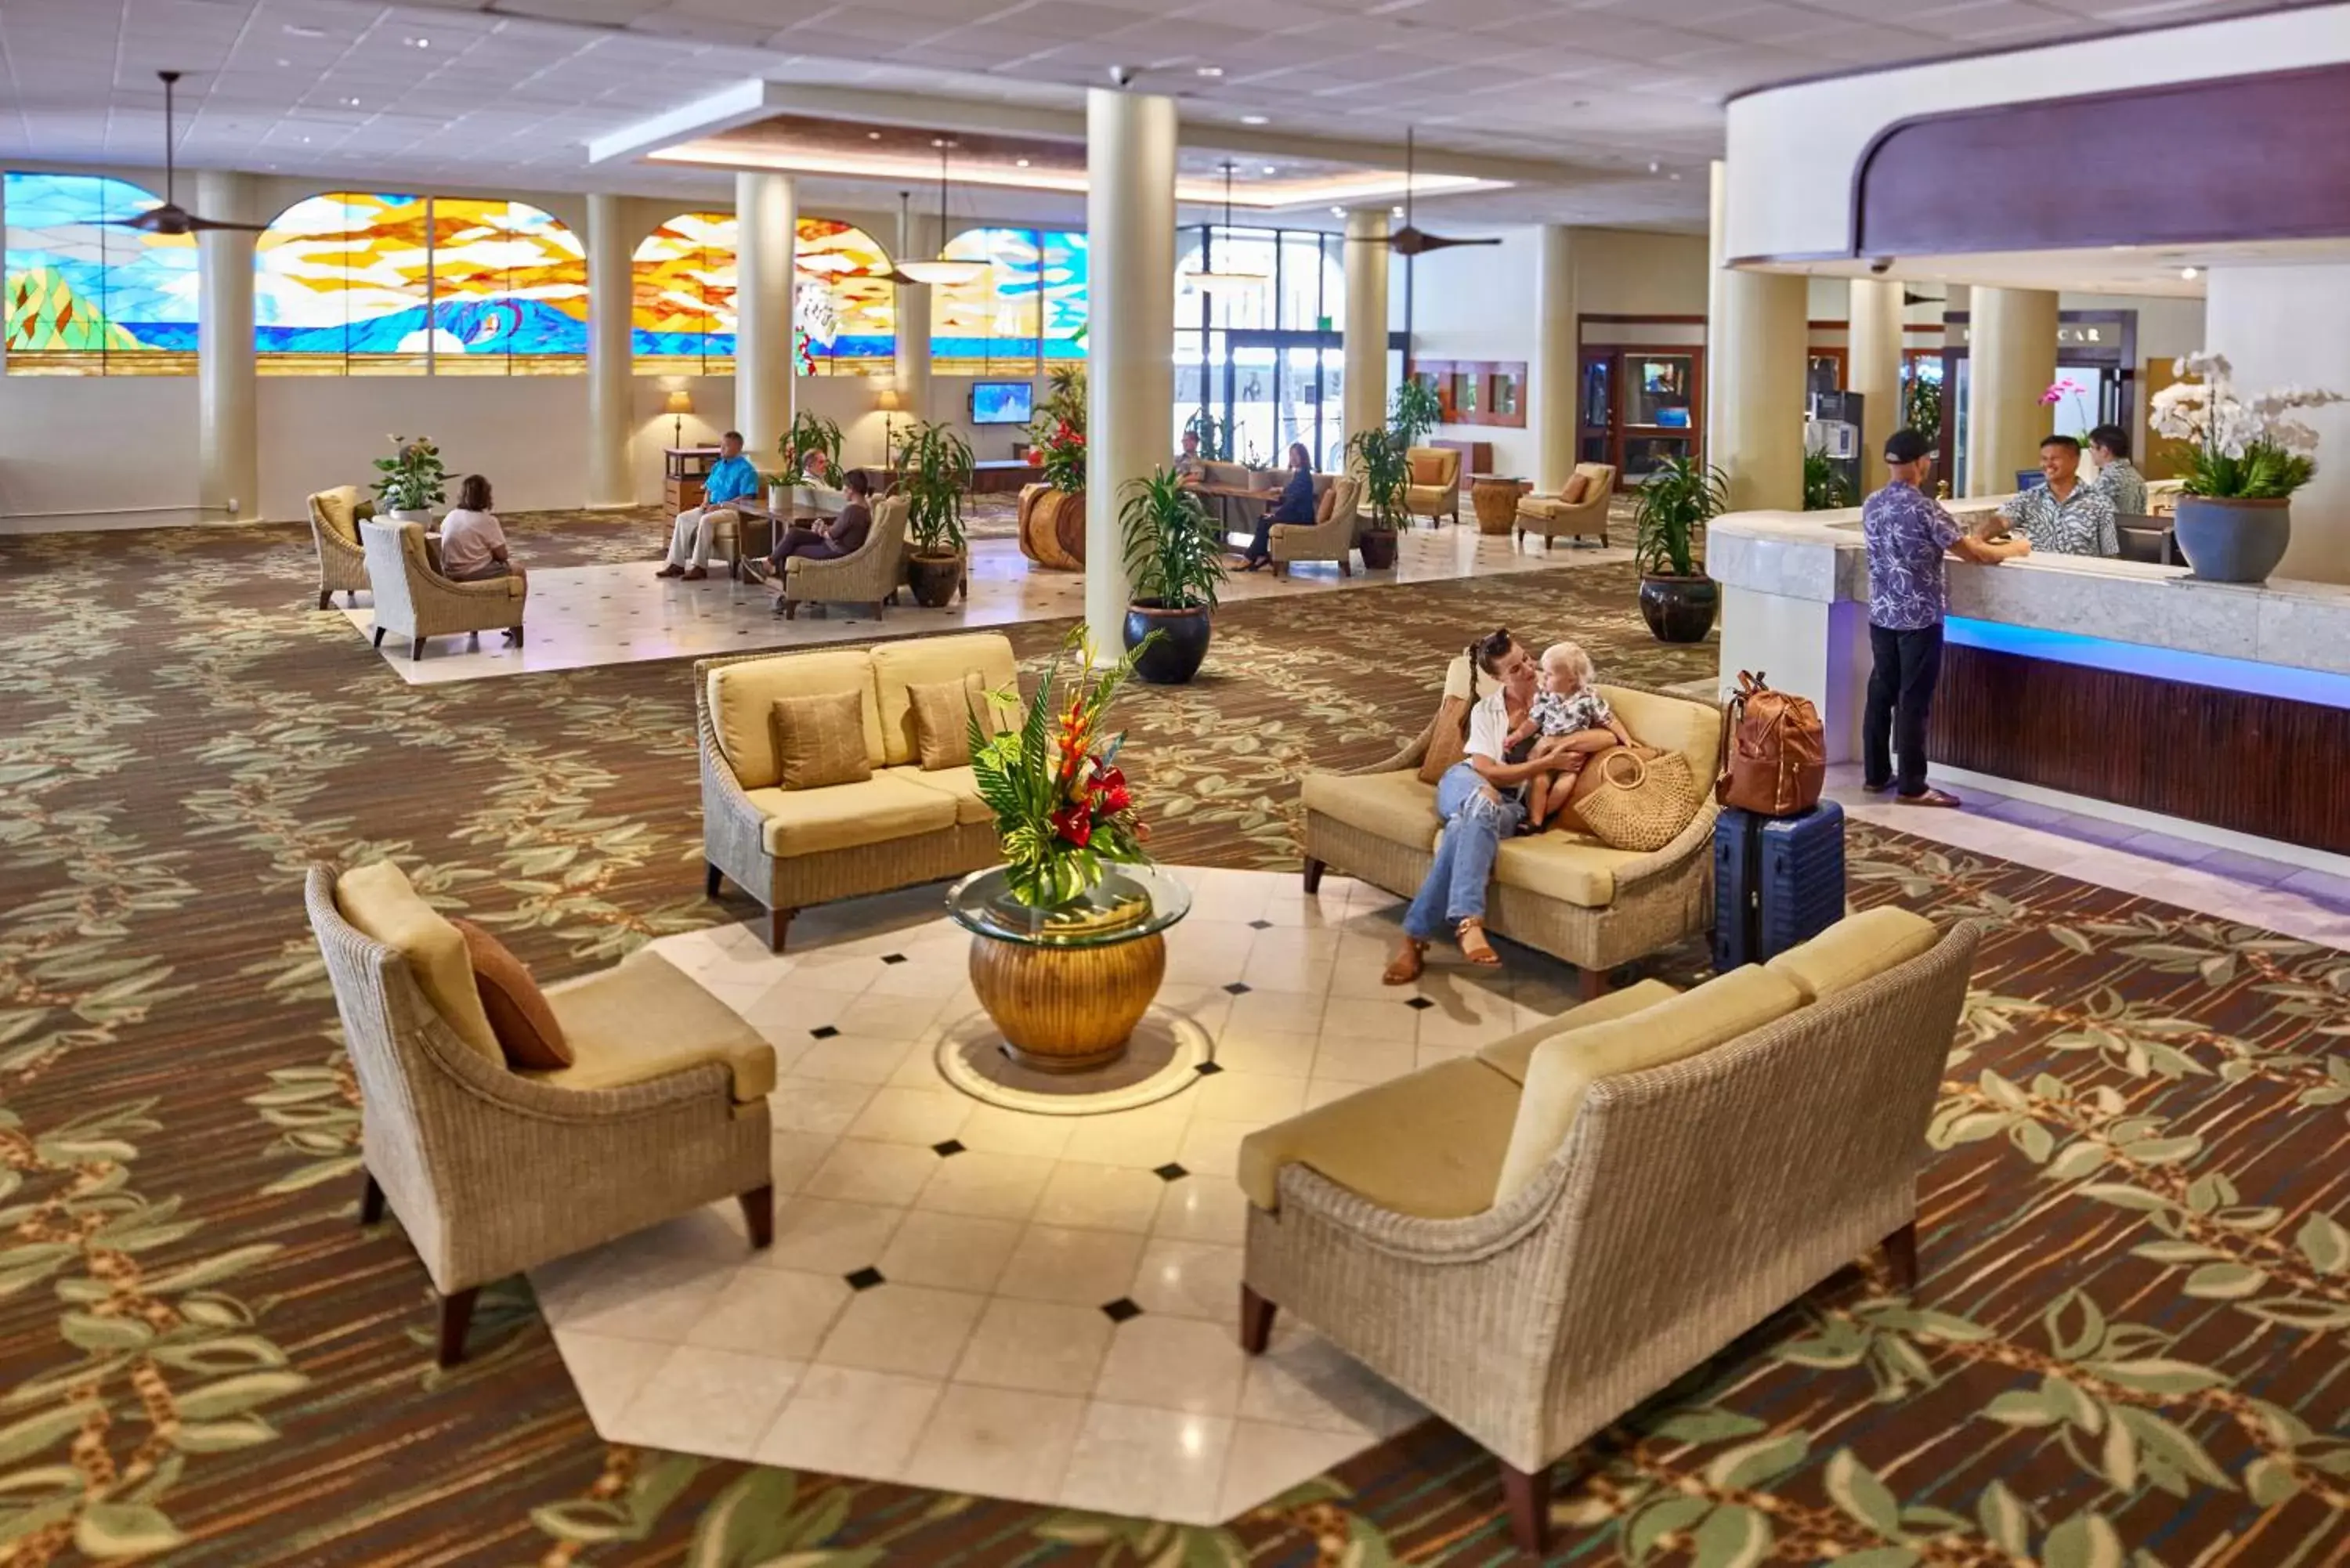 Lobby or reception in Waikiki Resort Hotel